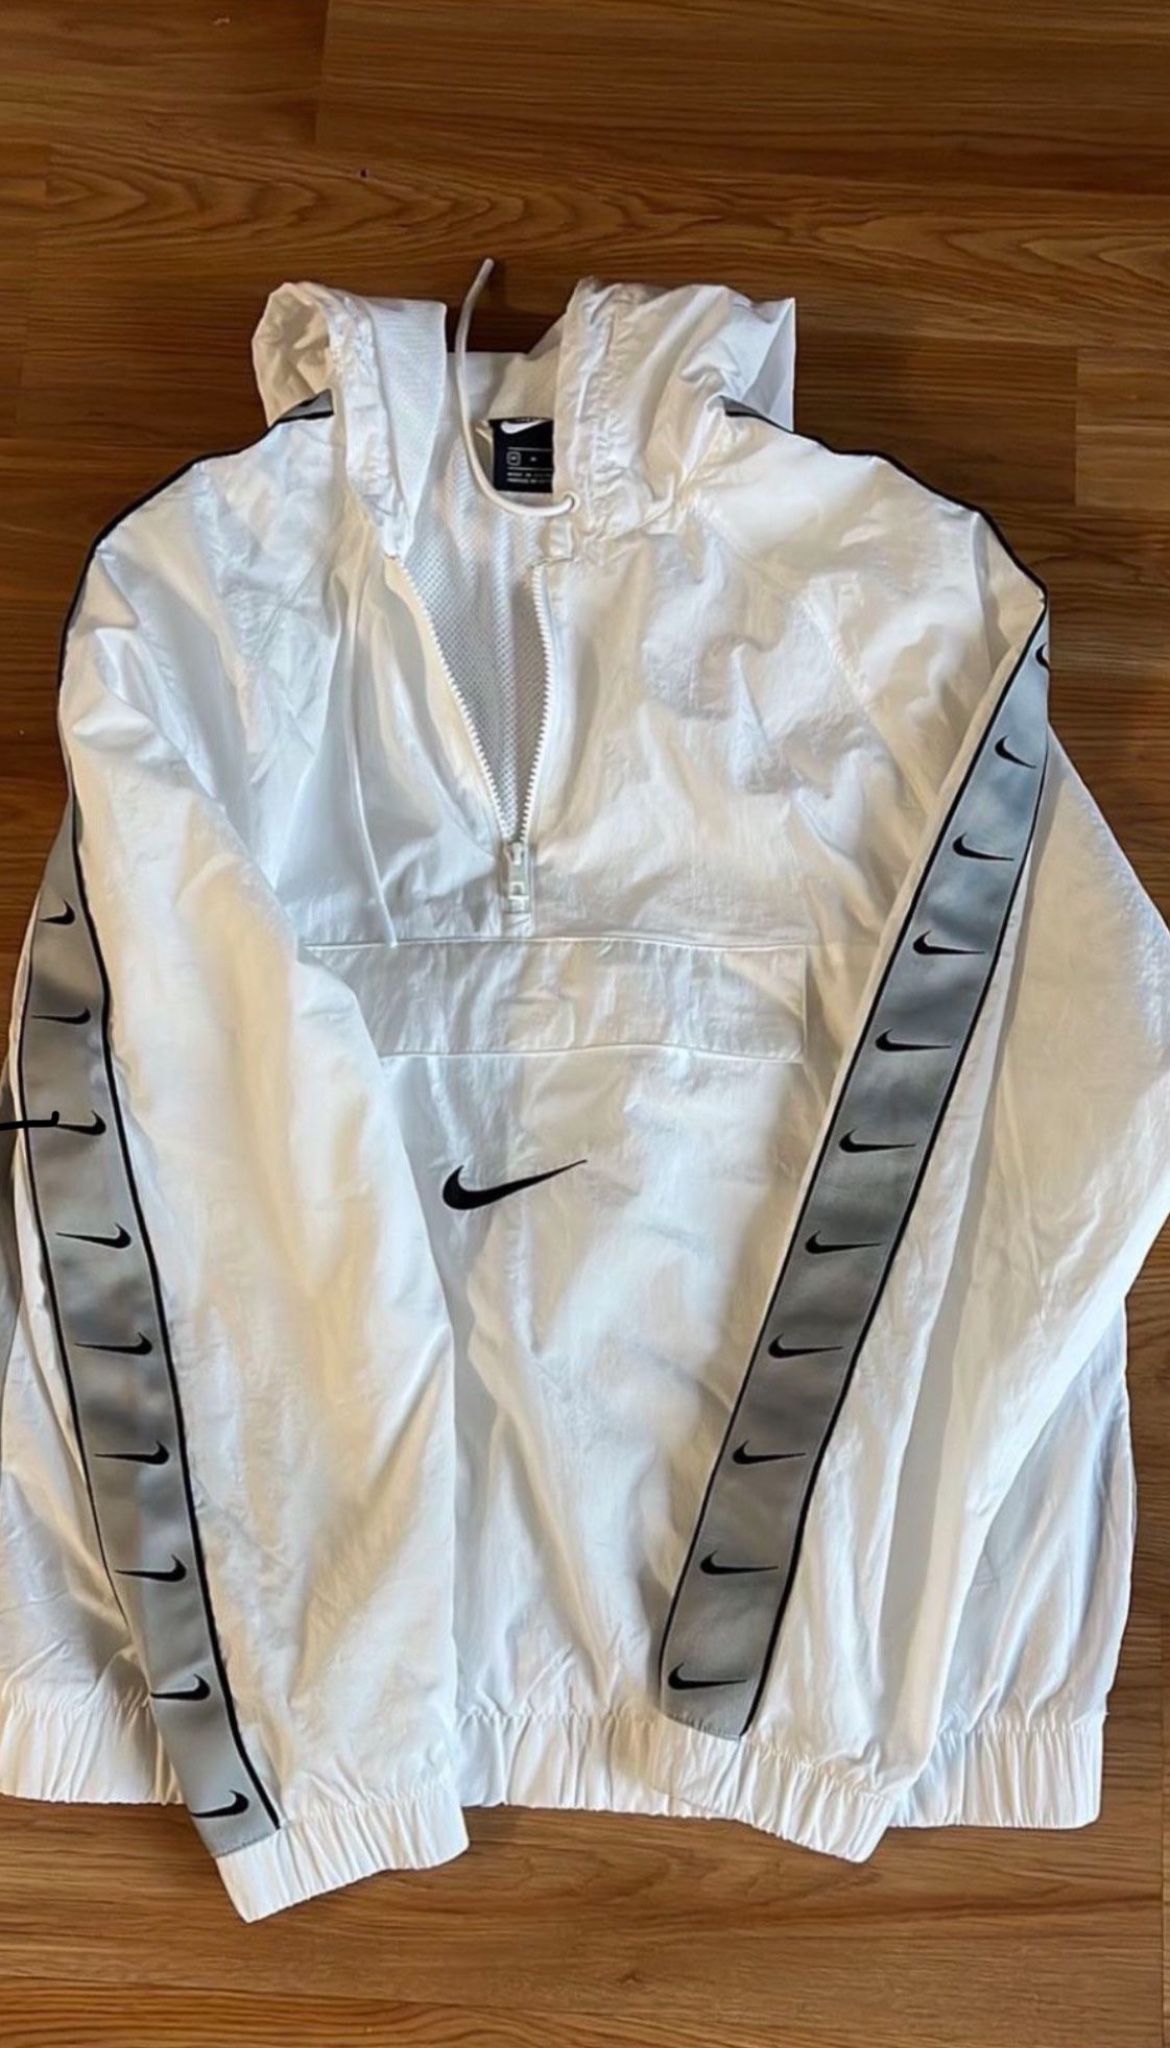 Mens Nike pullover Jacket Sz Med